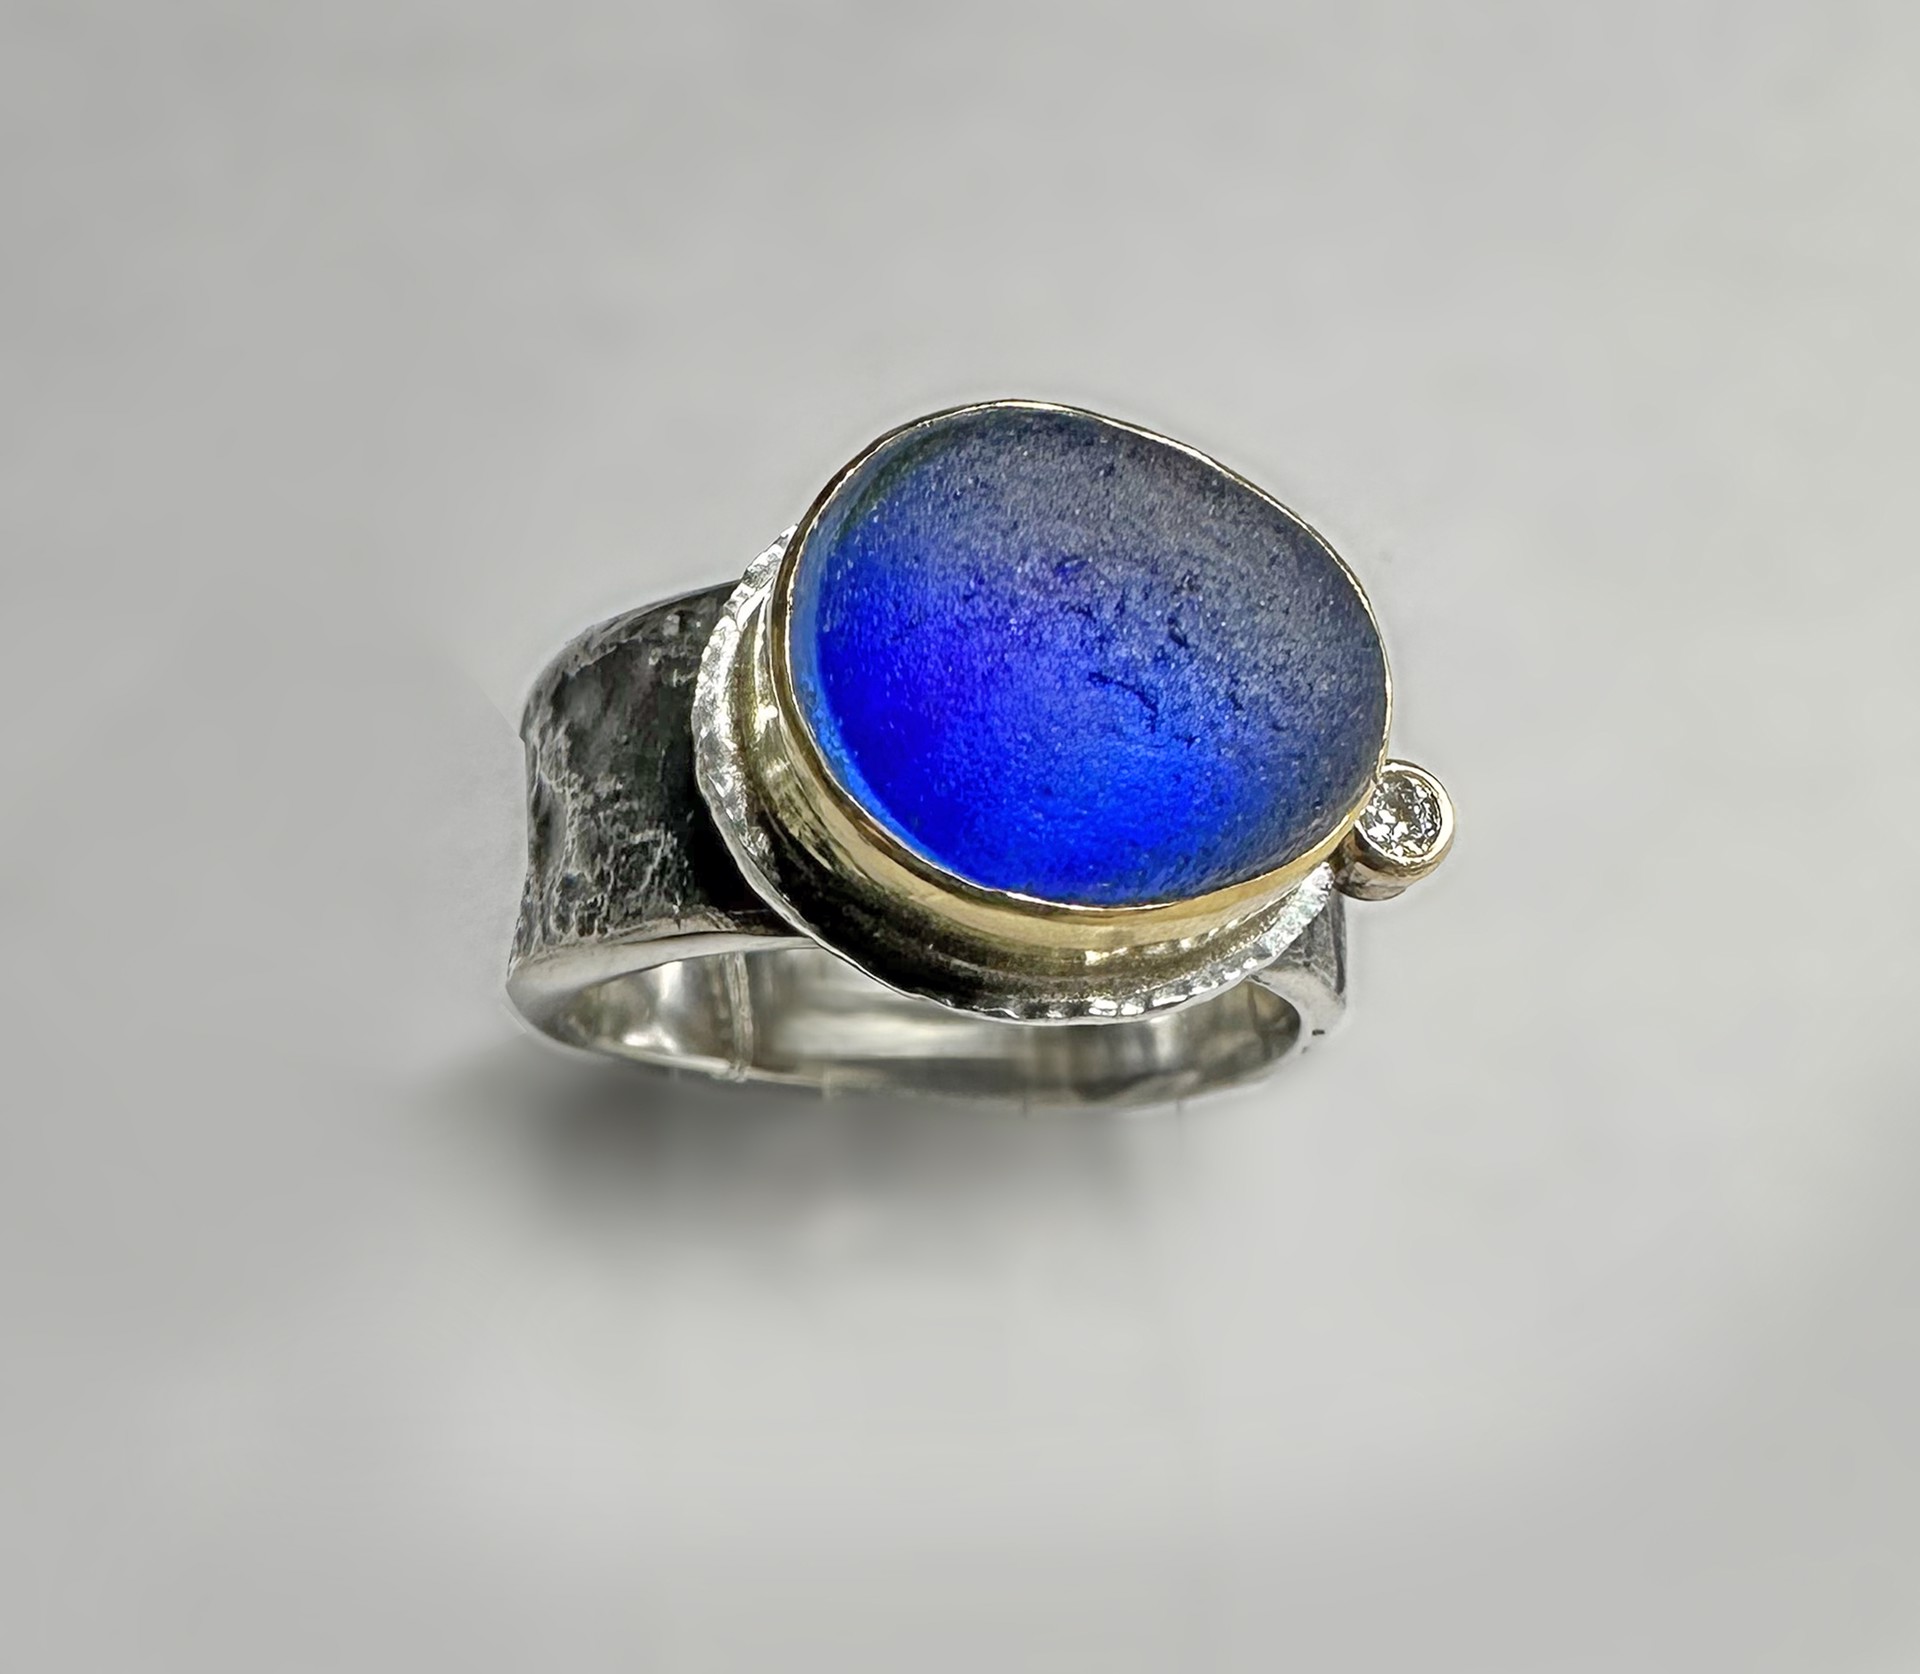 Hypnotic Blue Seaglass Ring by Judith Altruda